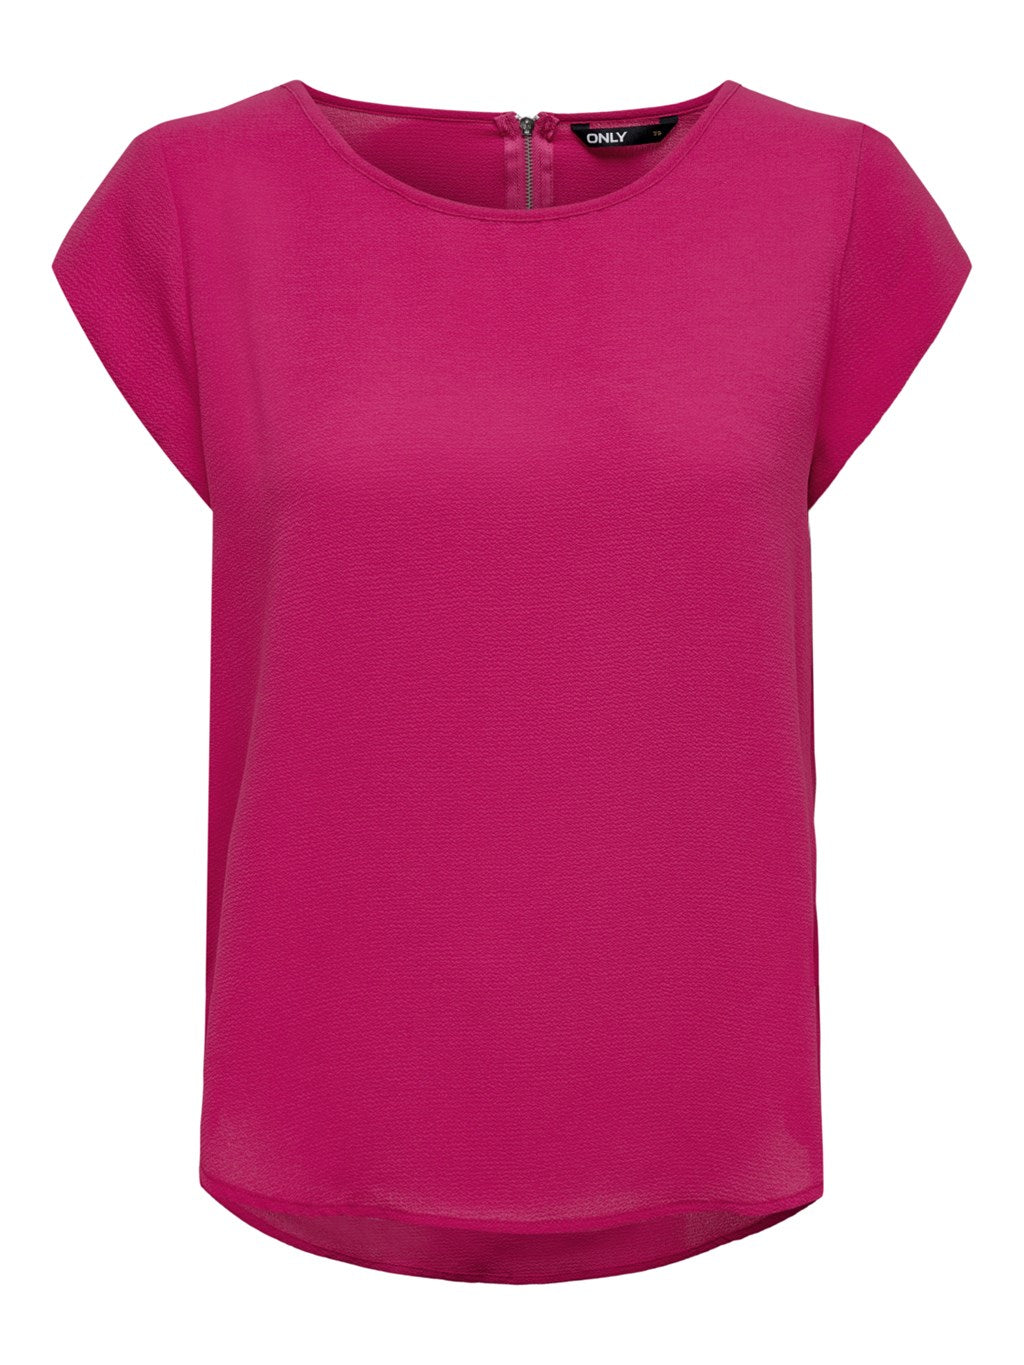 T-shirt rose fuchsia Only pour femme